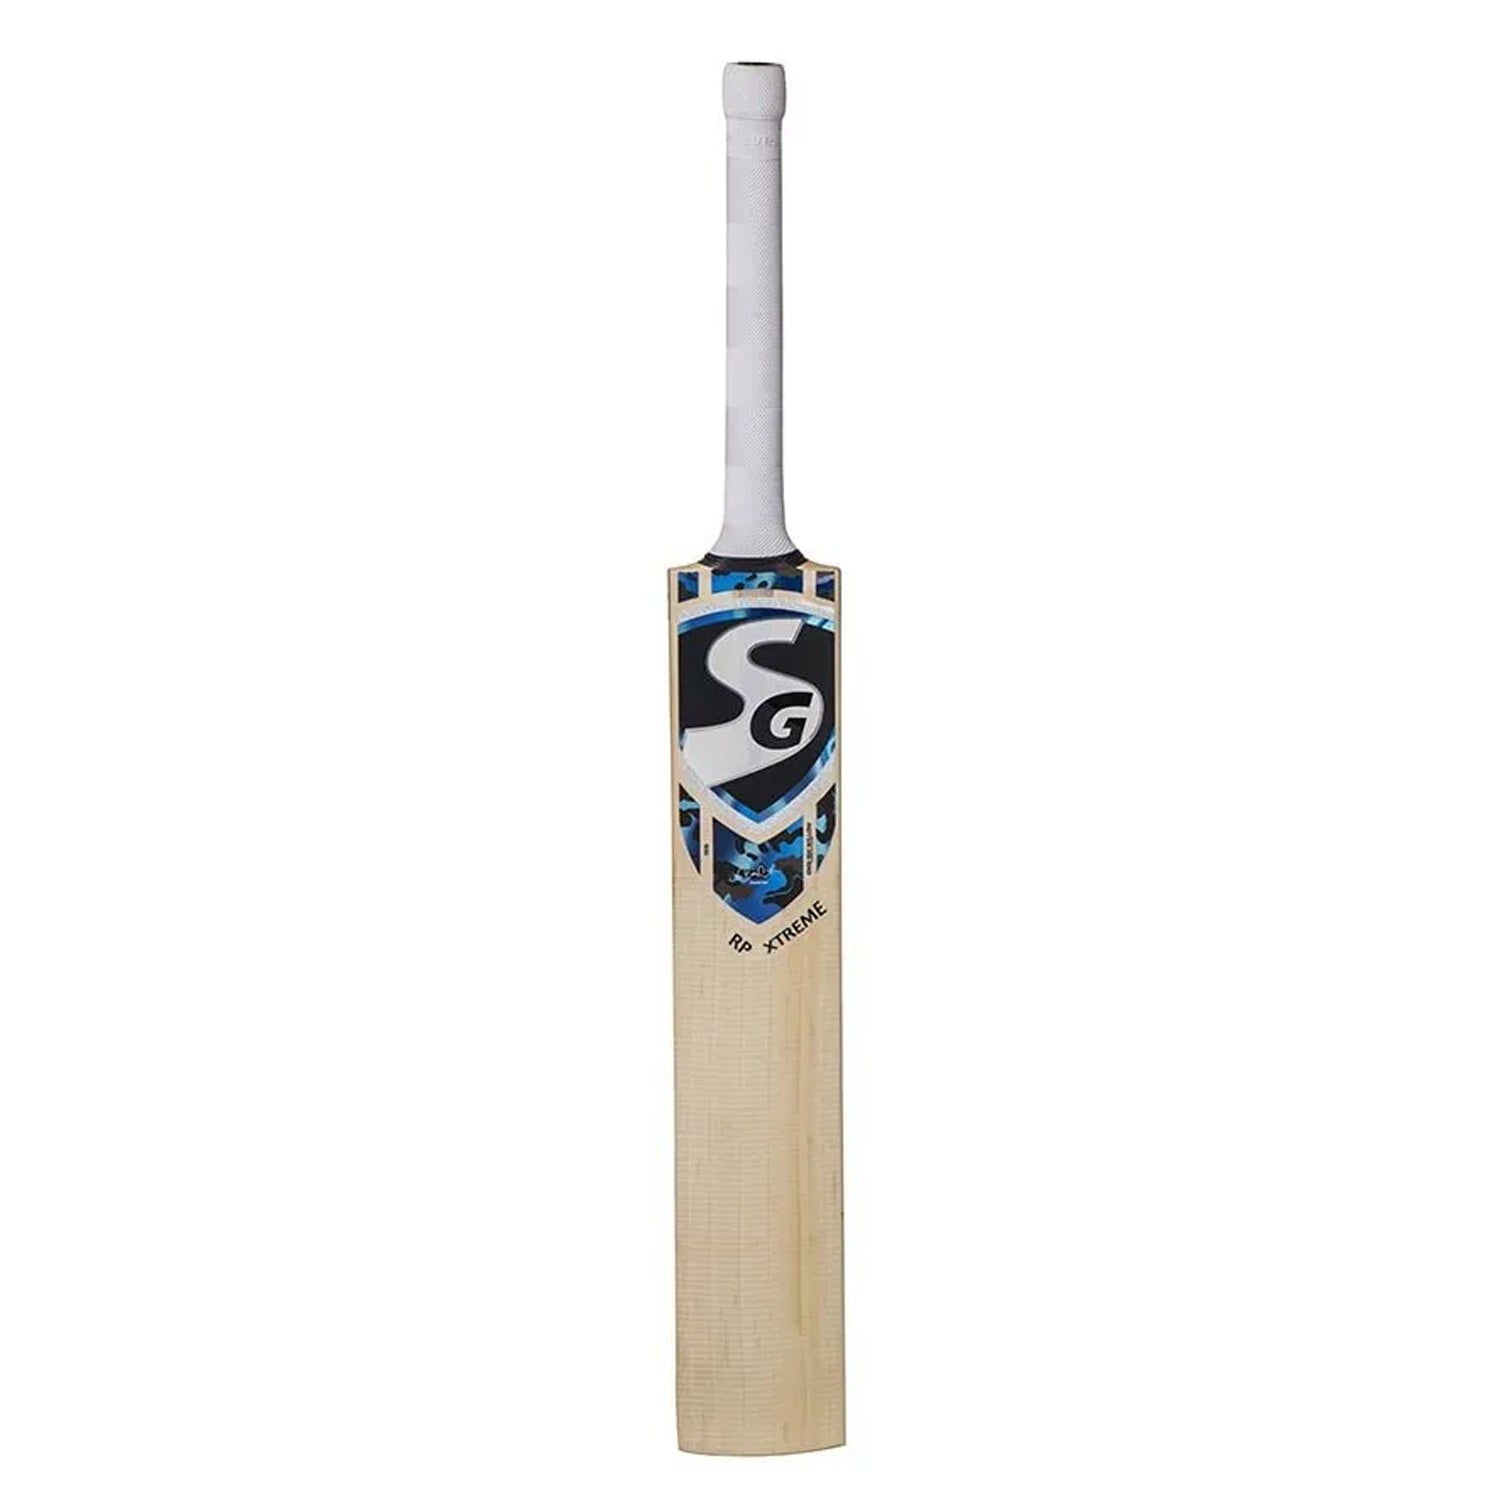 SG RP Xtreme English Willow Cricket Bat - Best Price online Prokicksports.com